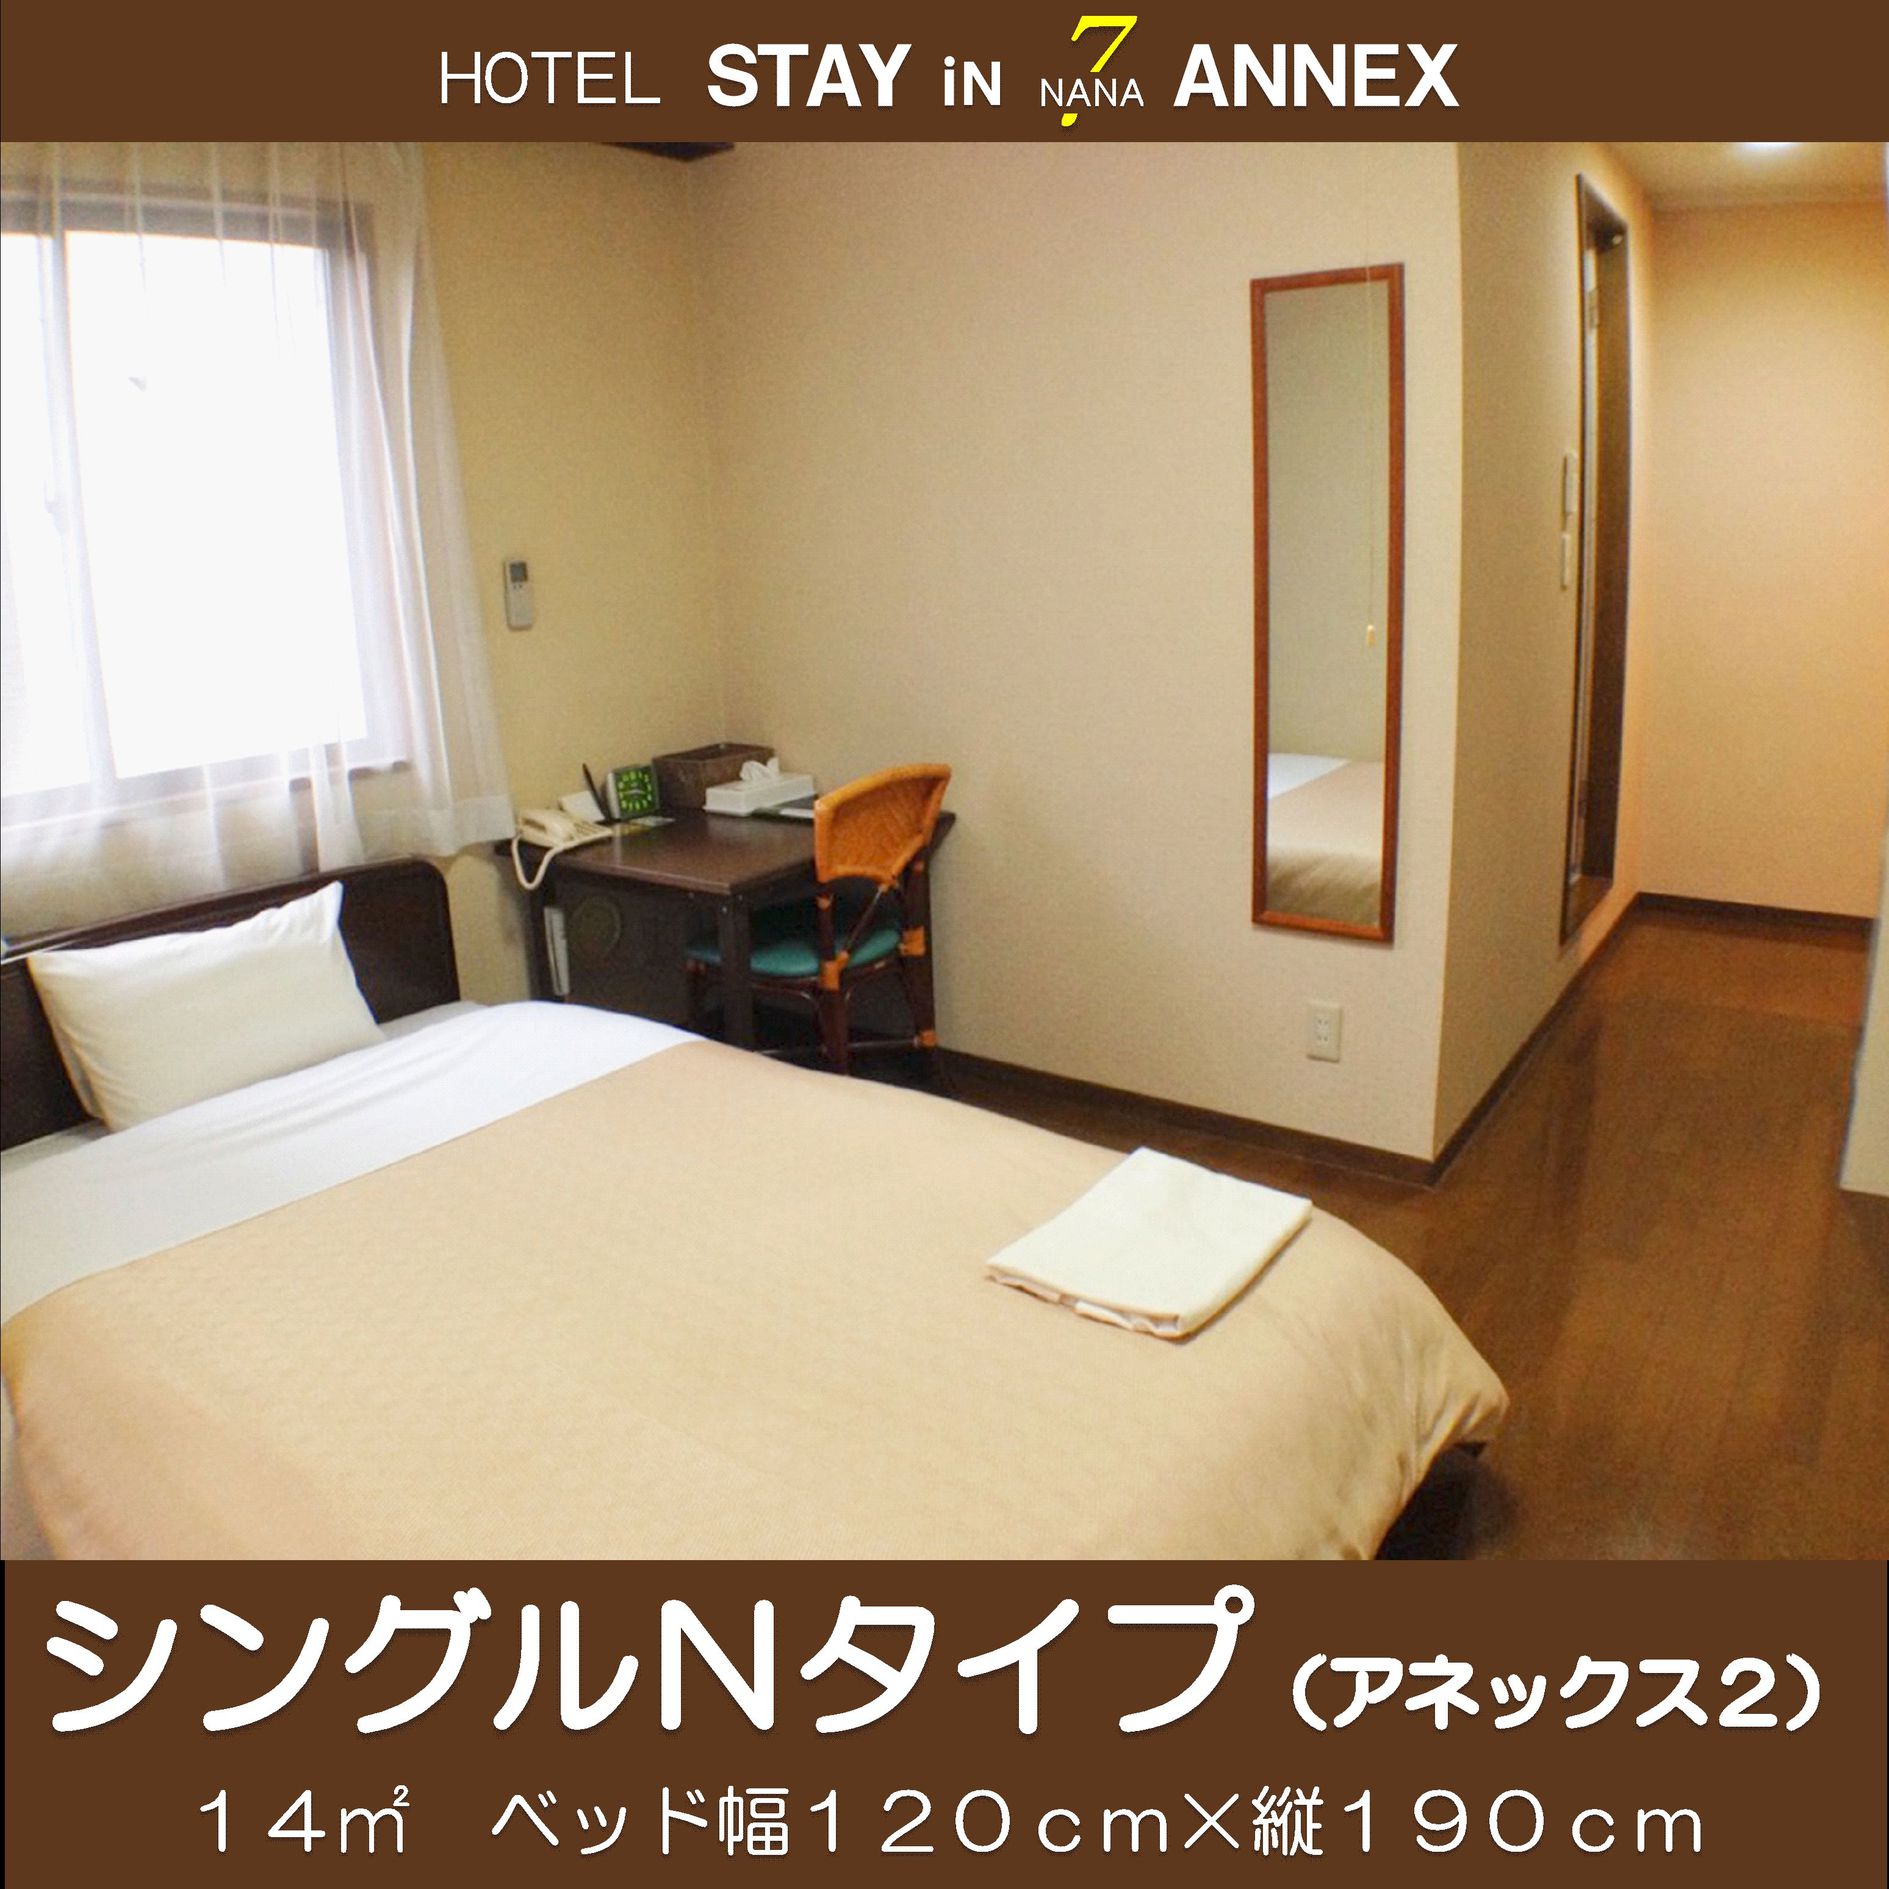 Hotel Stayin Nana Annex